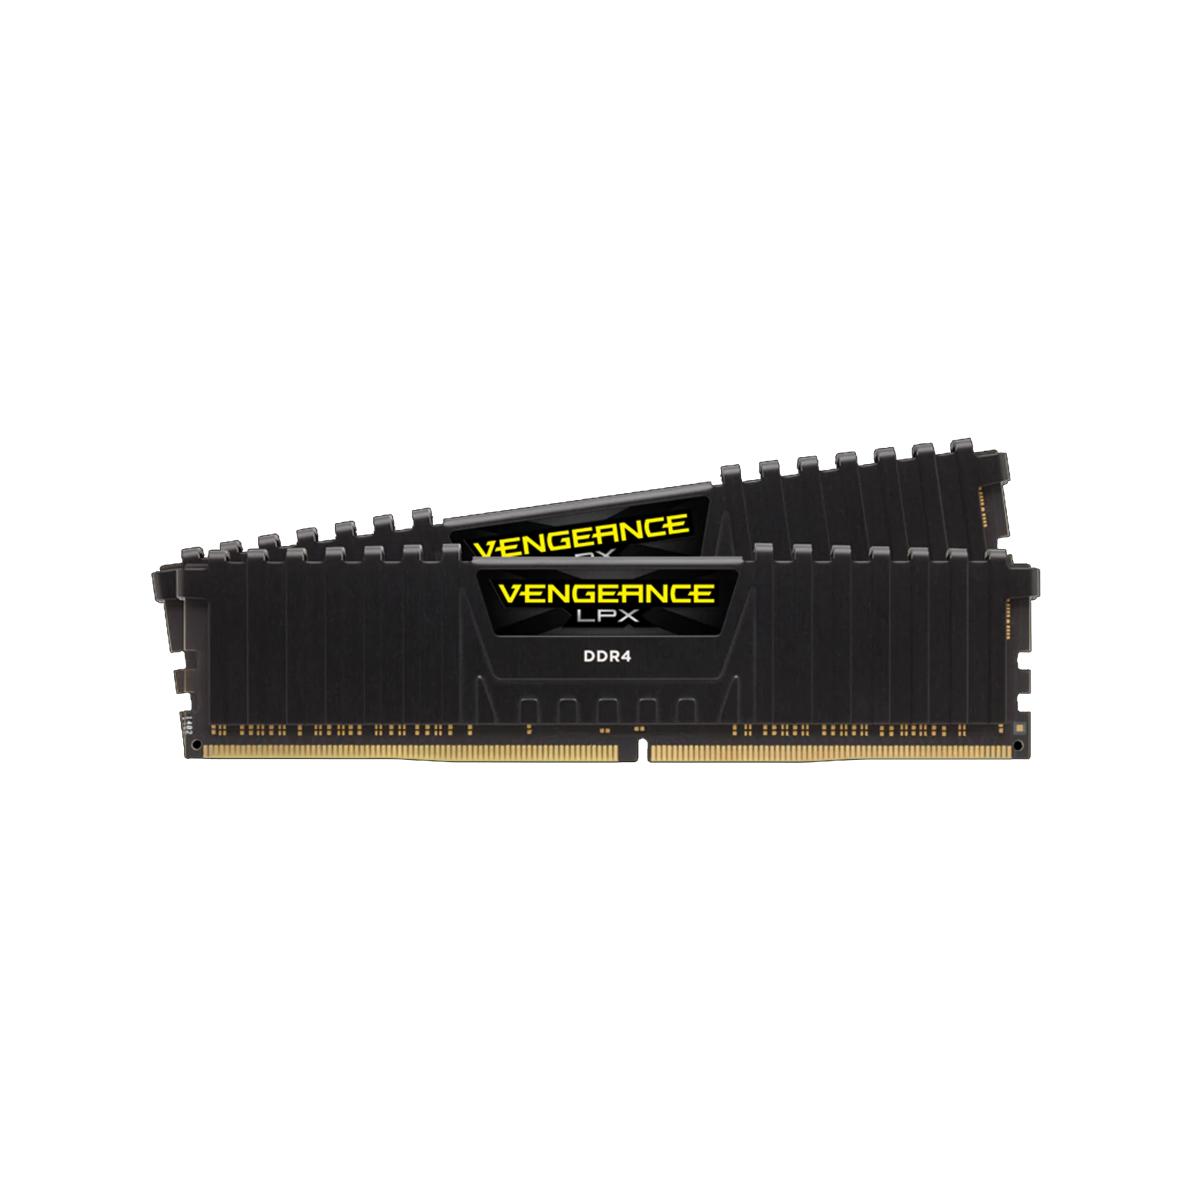 MEMORIA DIMM DDR4 CORSAIR (CMK16GX4M2A2666C16) 16GB 2666MHZ (2X8GB) VENGEANCE LPX, NEGRO - CORSAIR